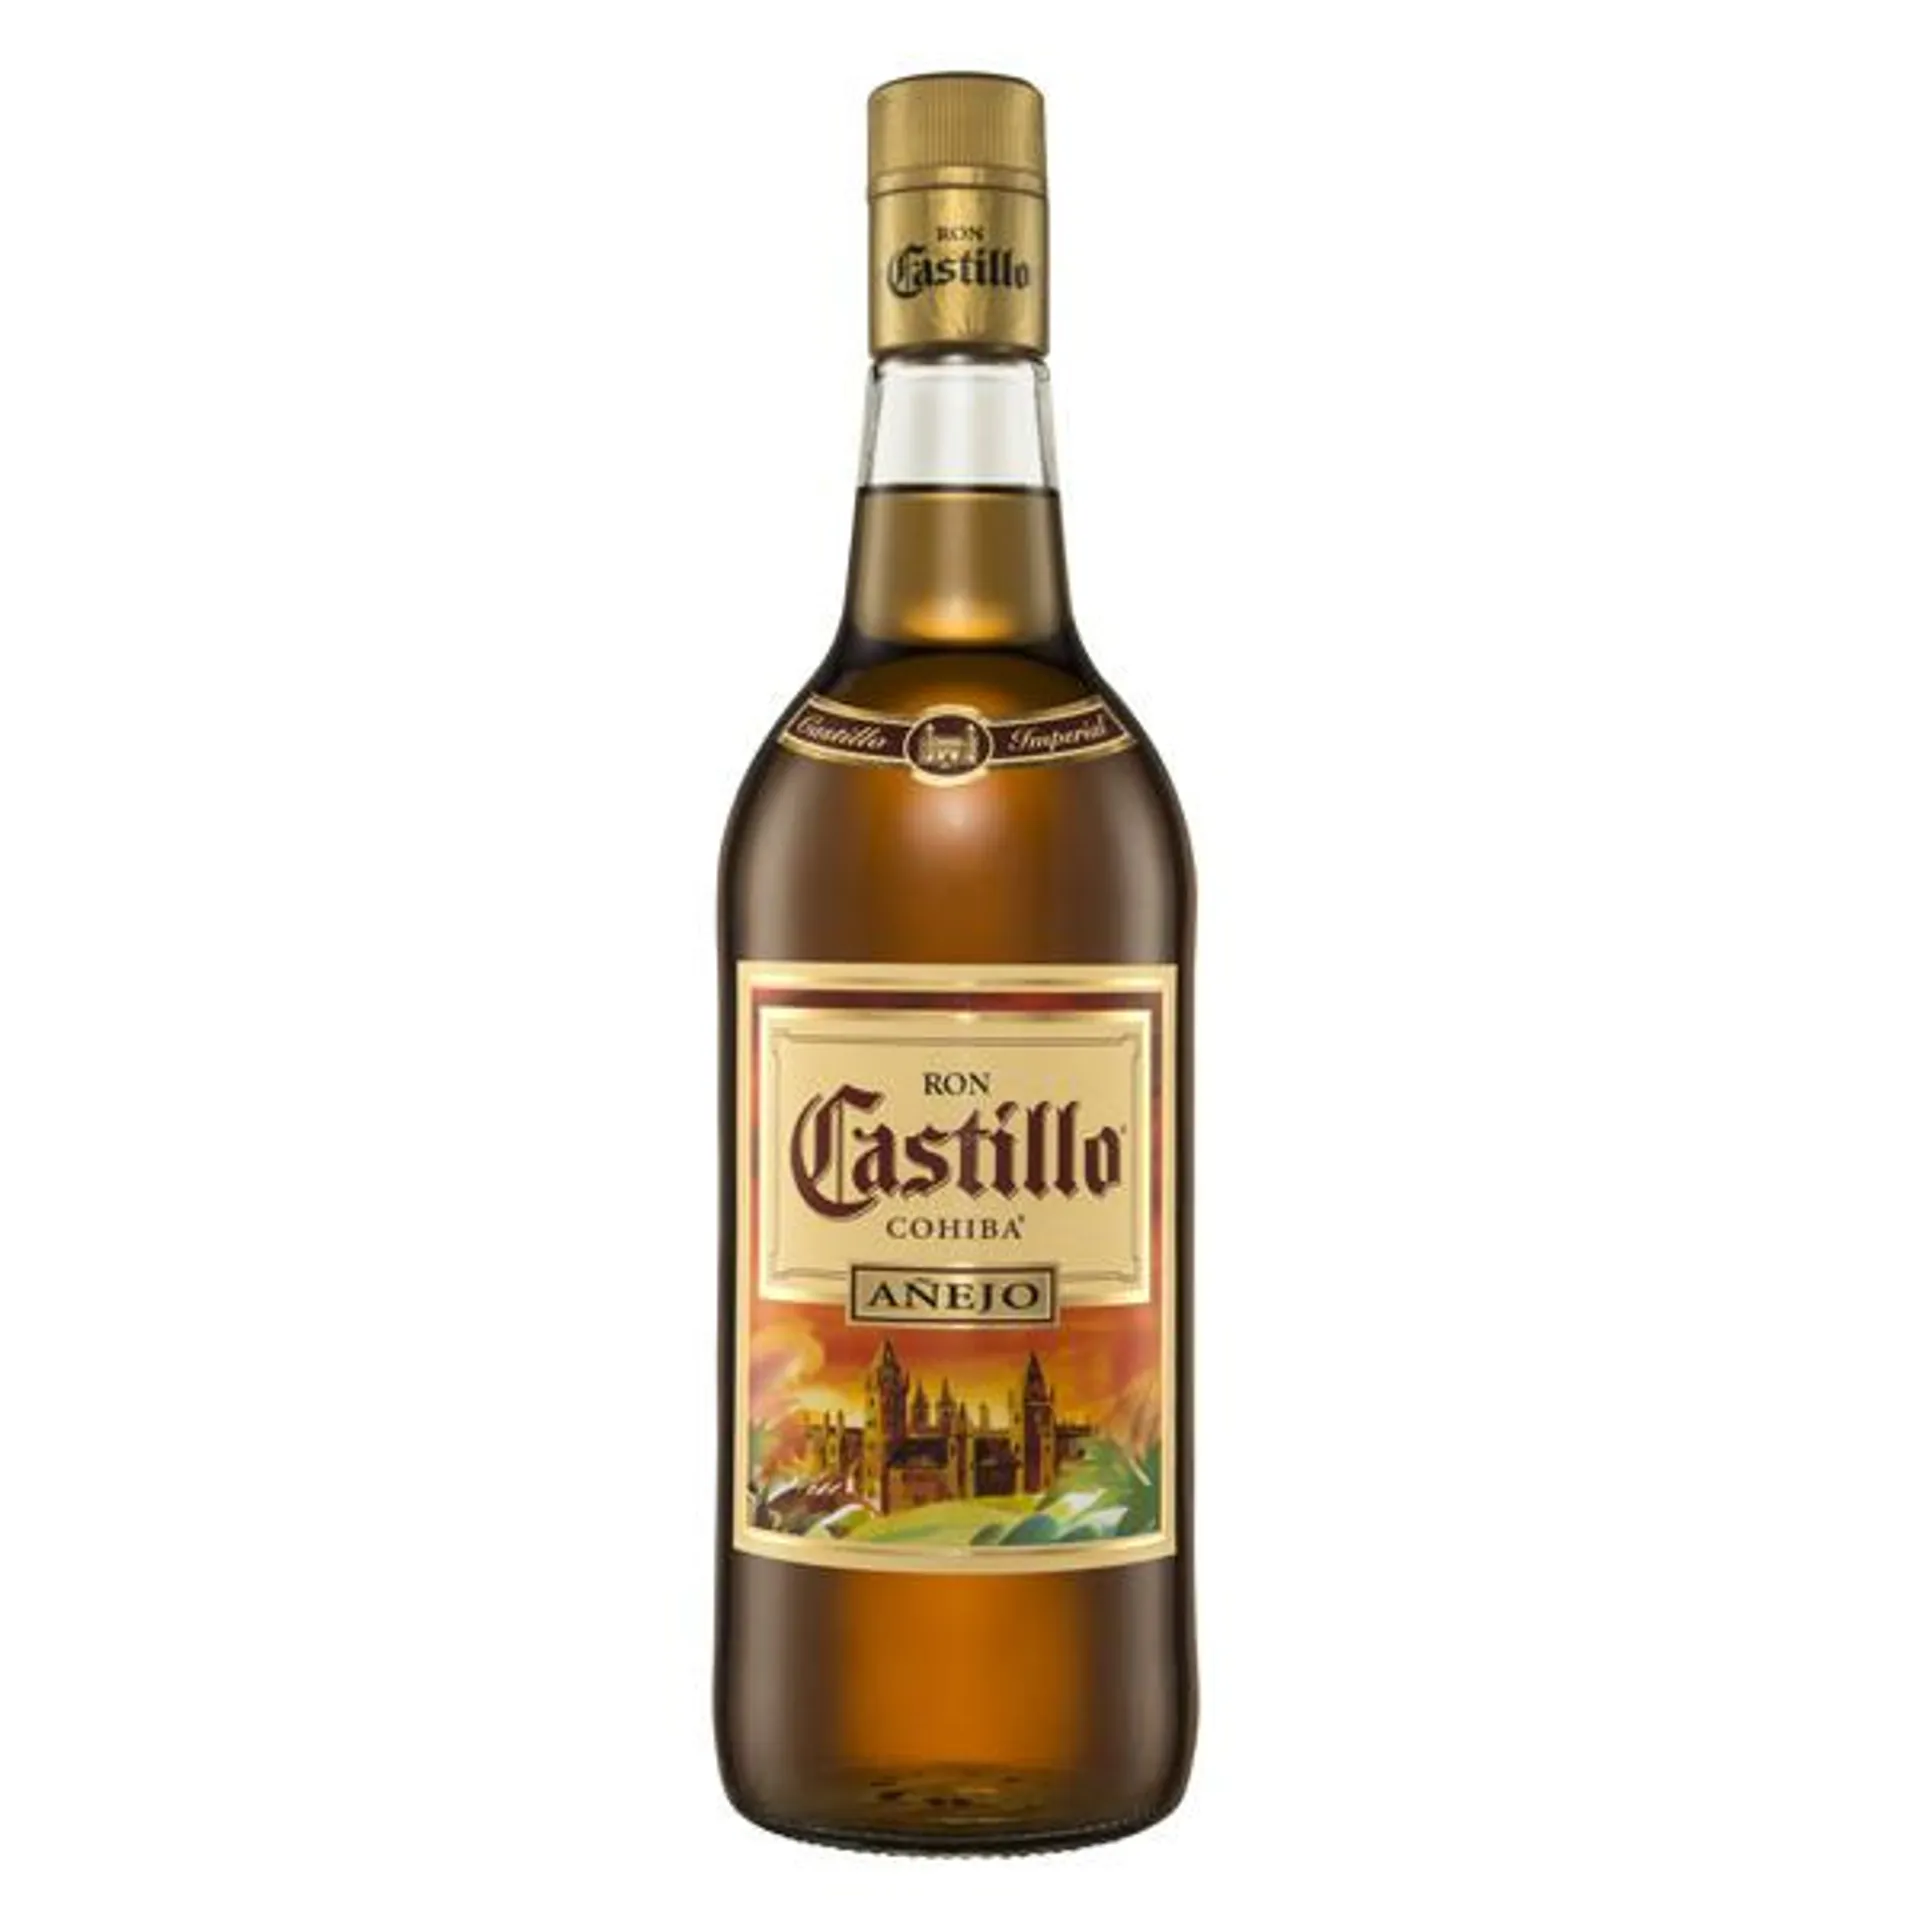 Ron Castillo Imperial 1000 ml